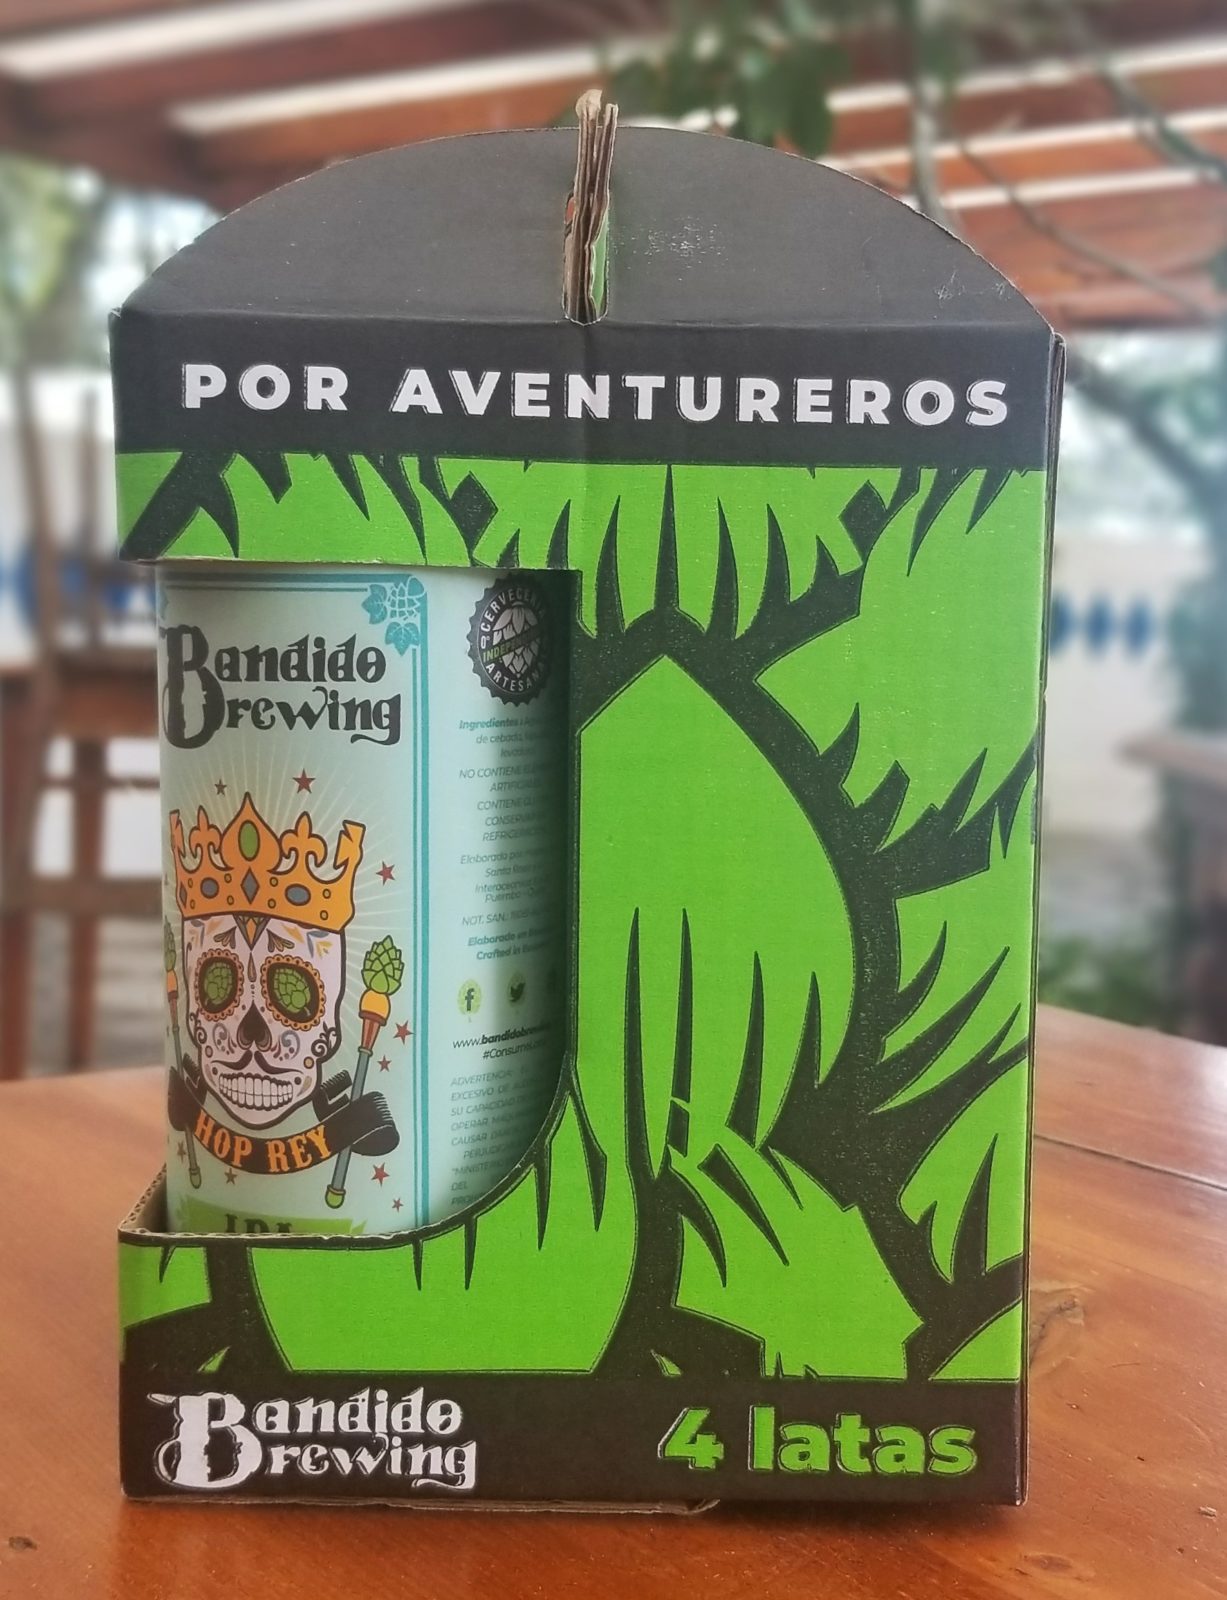 Bandido Brewing marketing campaign